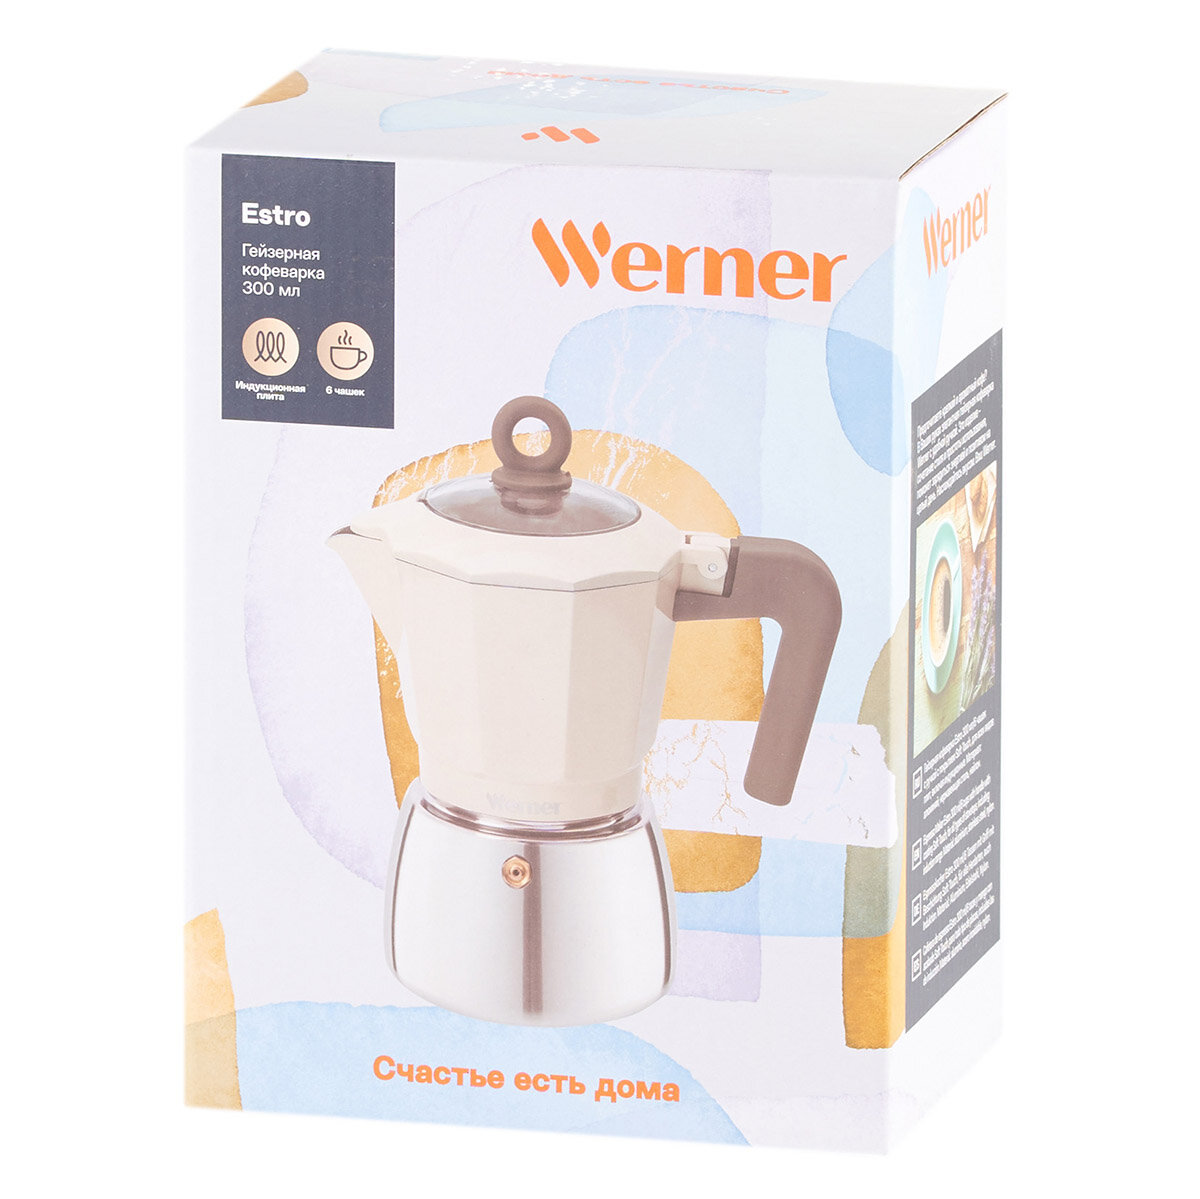 Гейзерная кофеварка Werner Estro молочно-бежевая 300 мл - фото №5